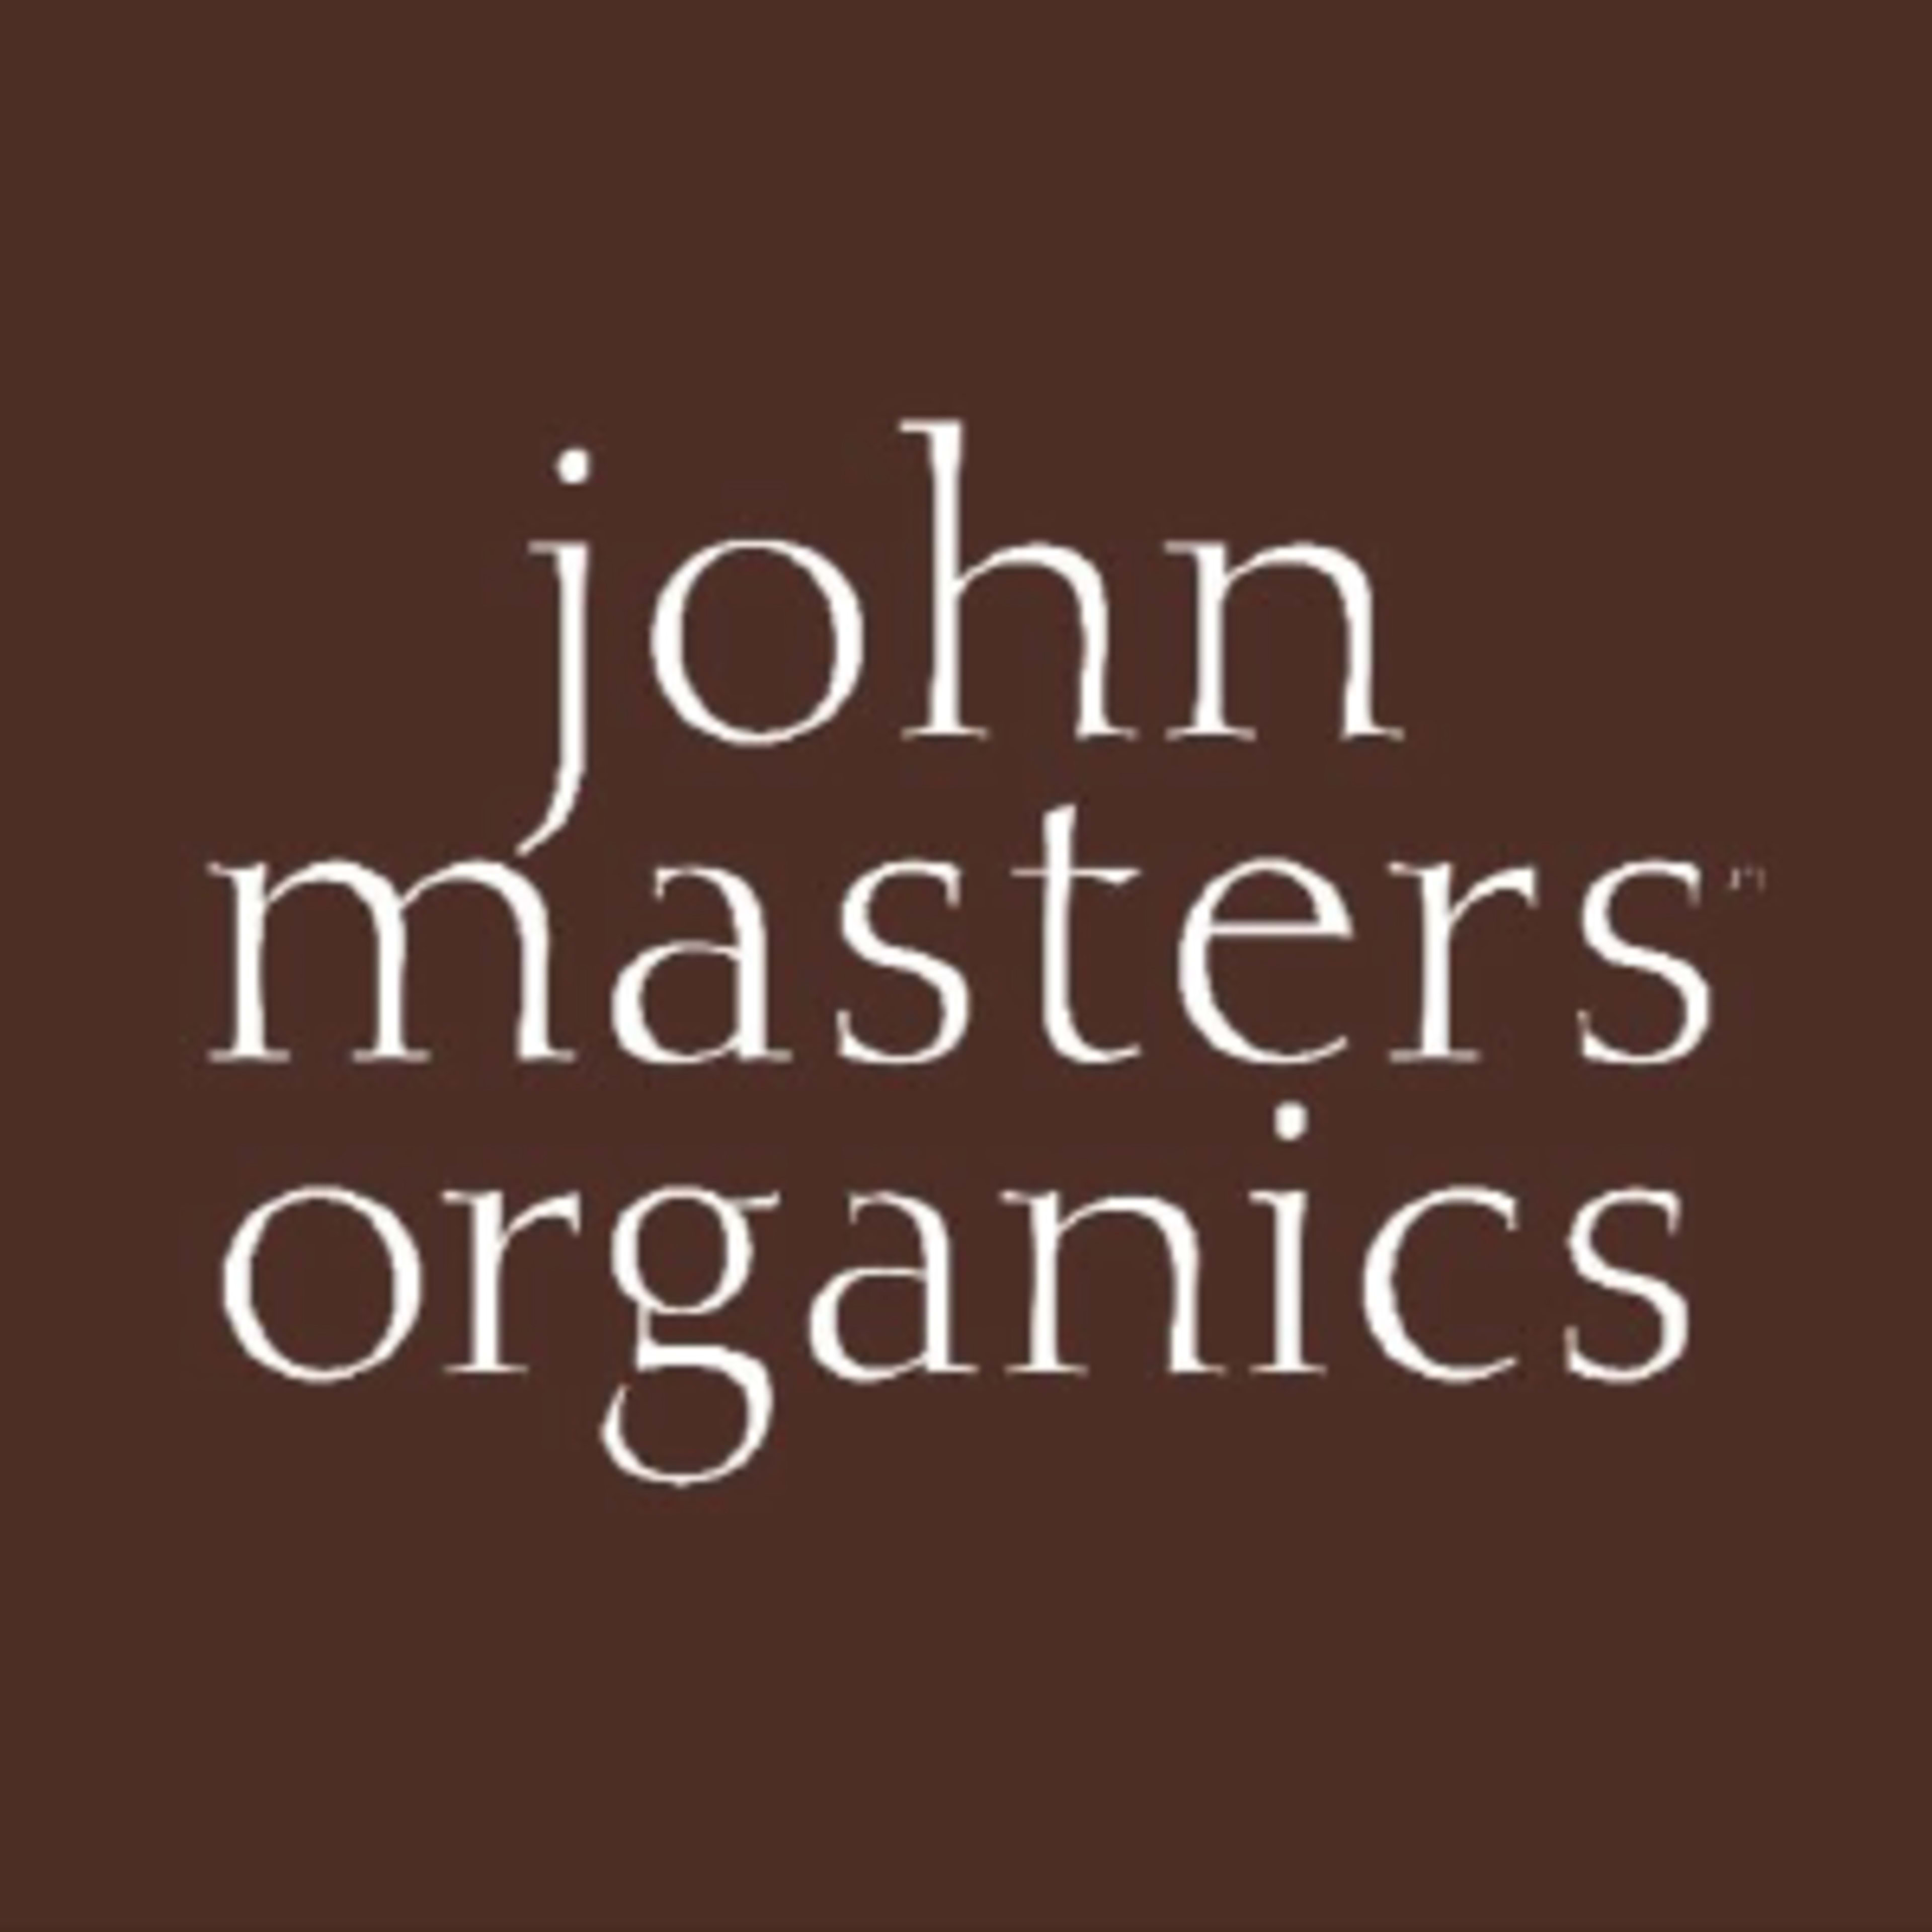 John Masters OrganicsCode